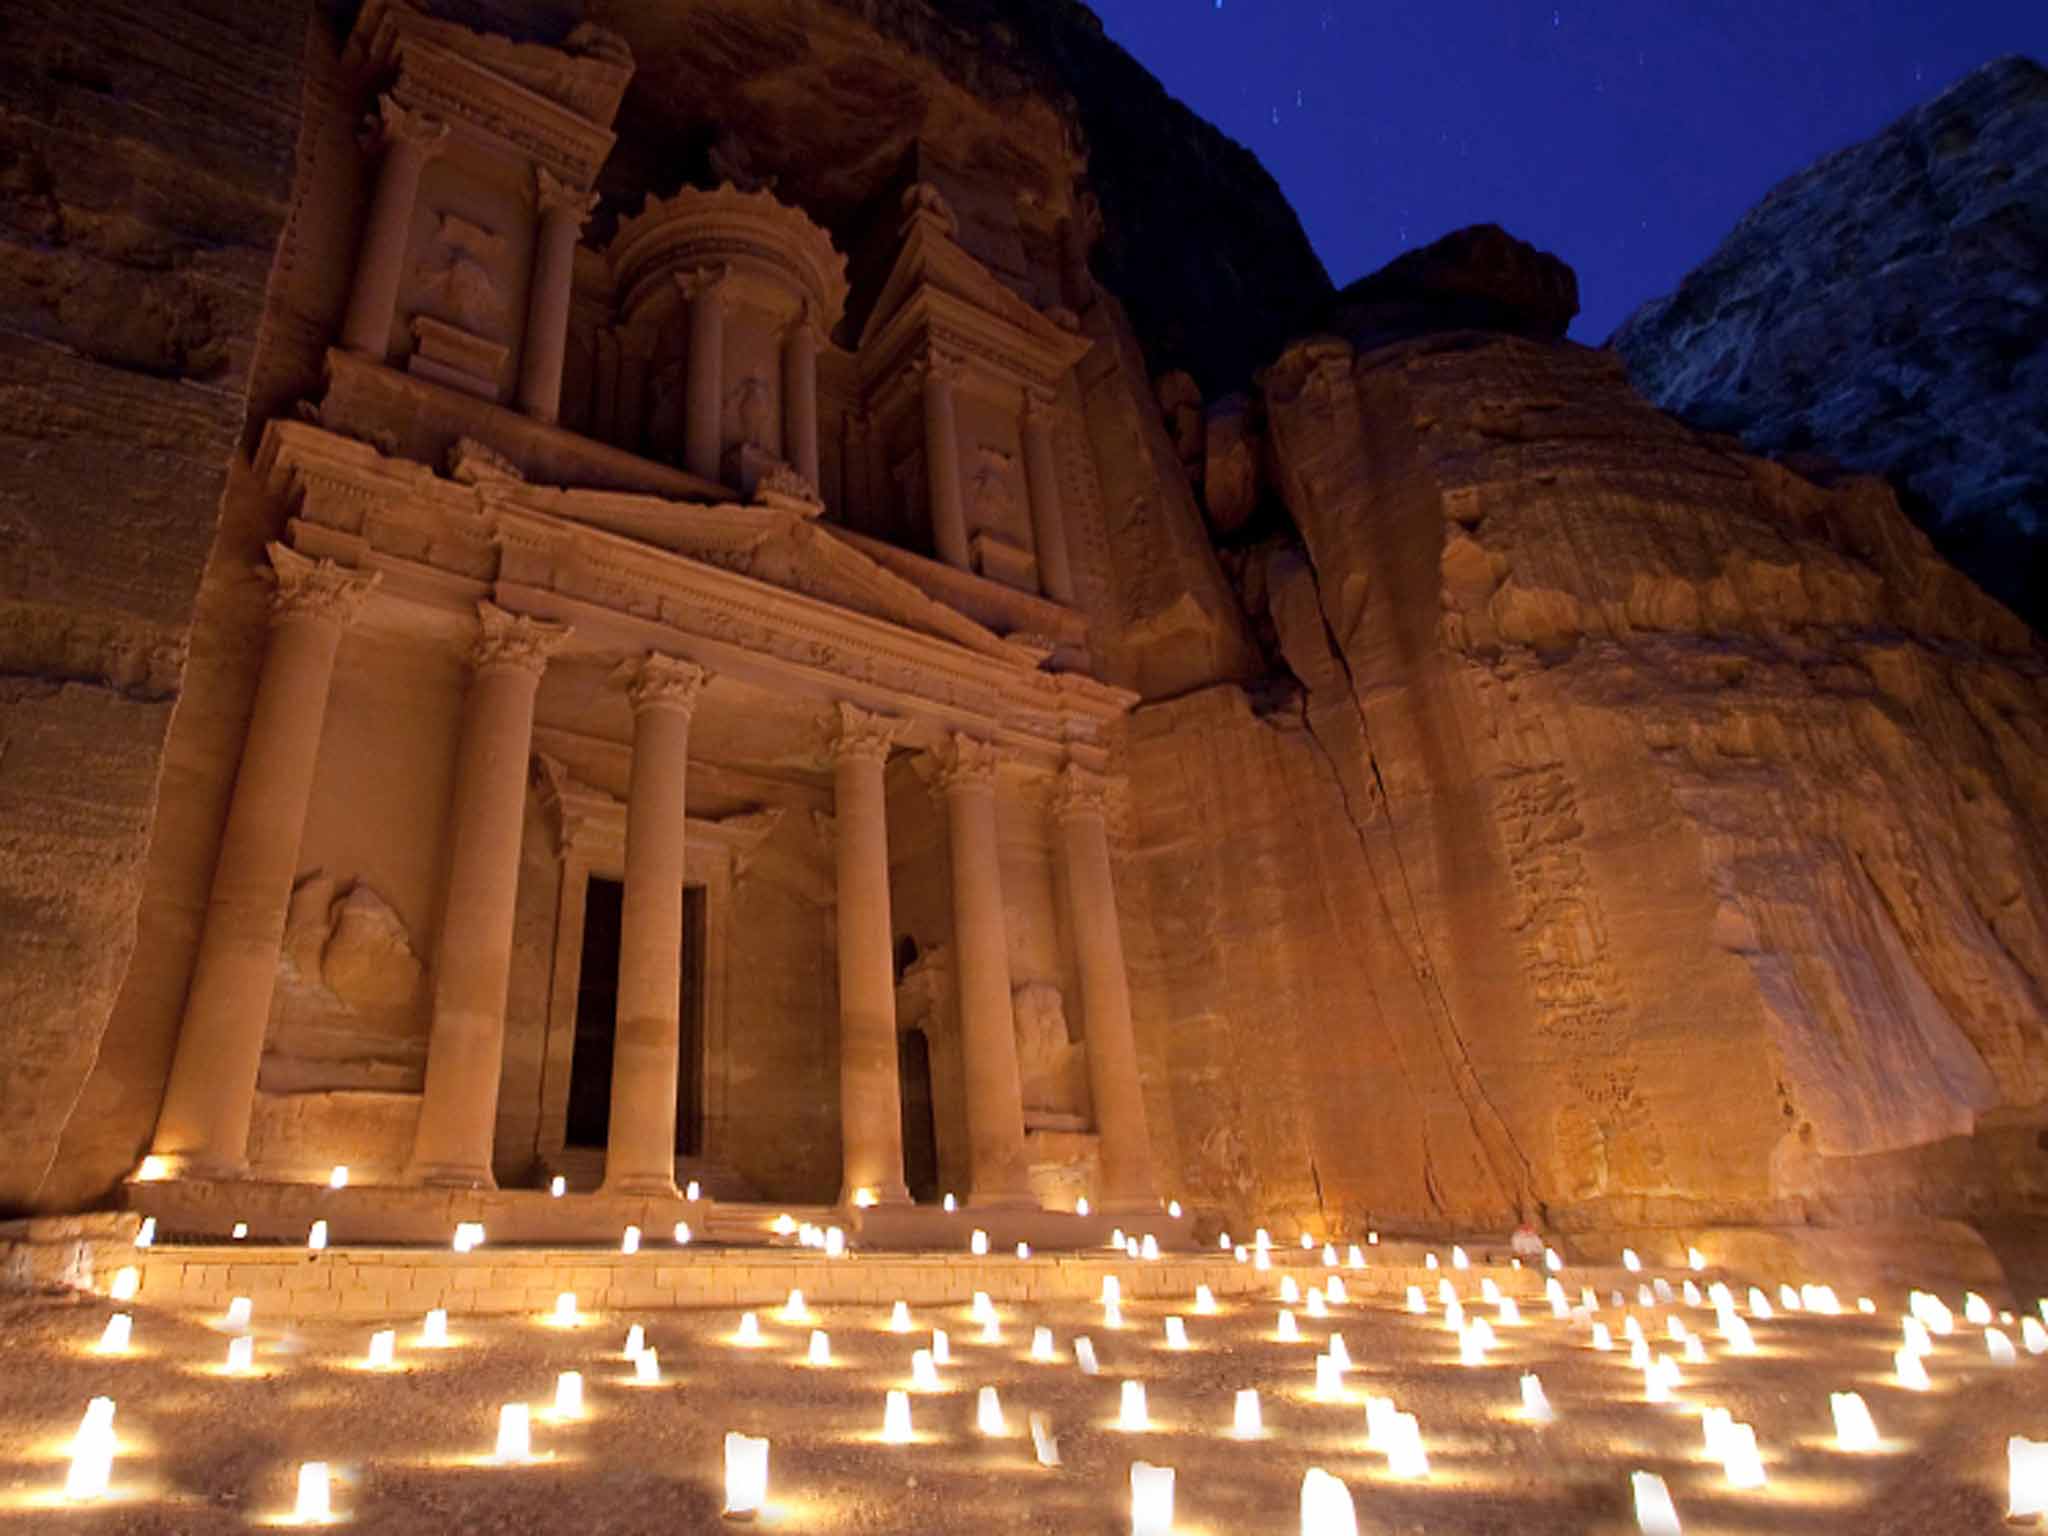 Light show: Amanda enjoyed a feast under the stars in Petra